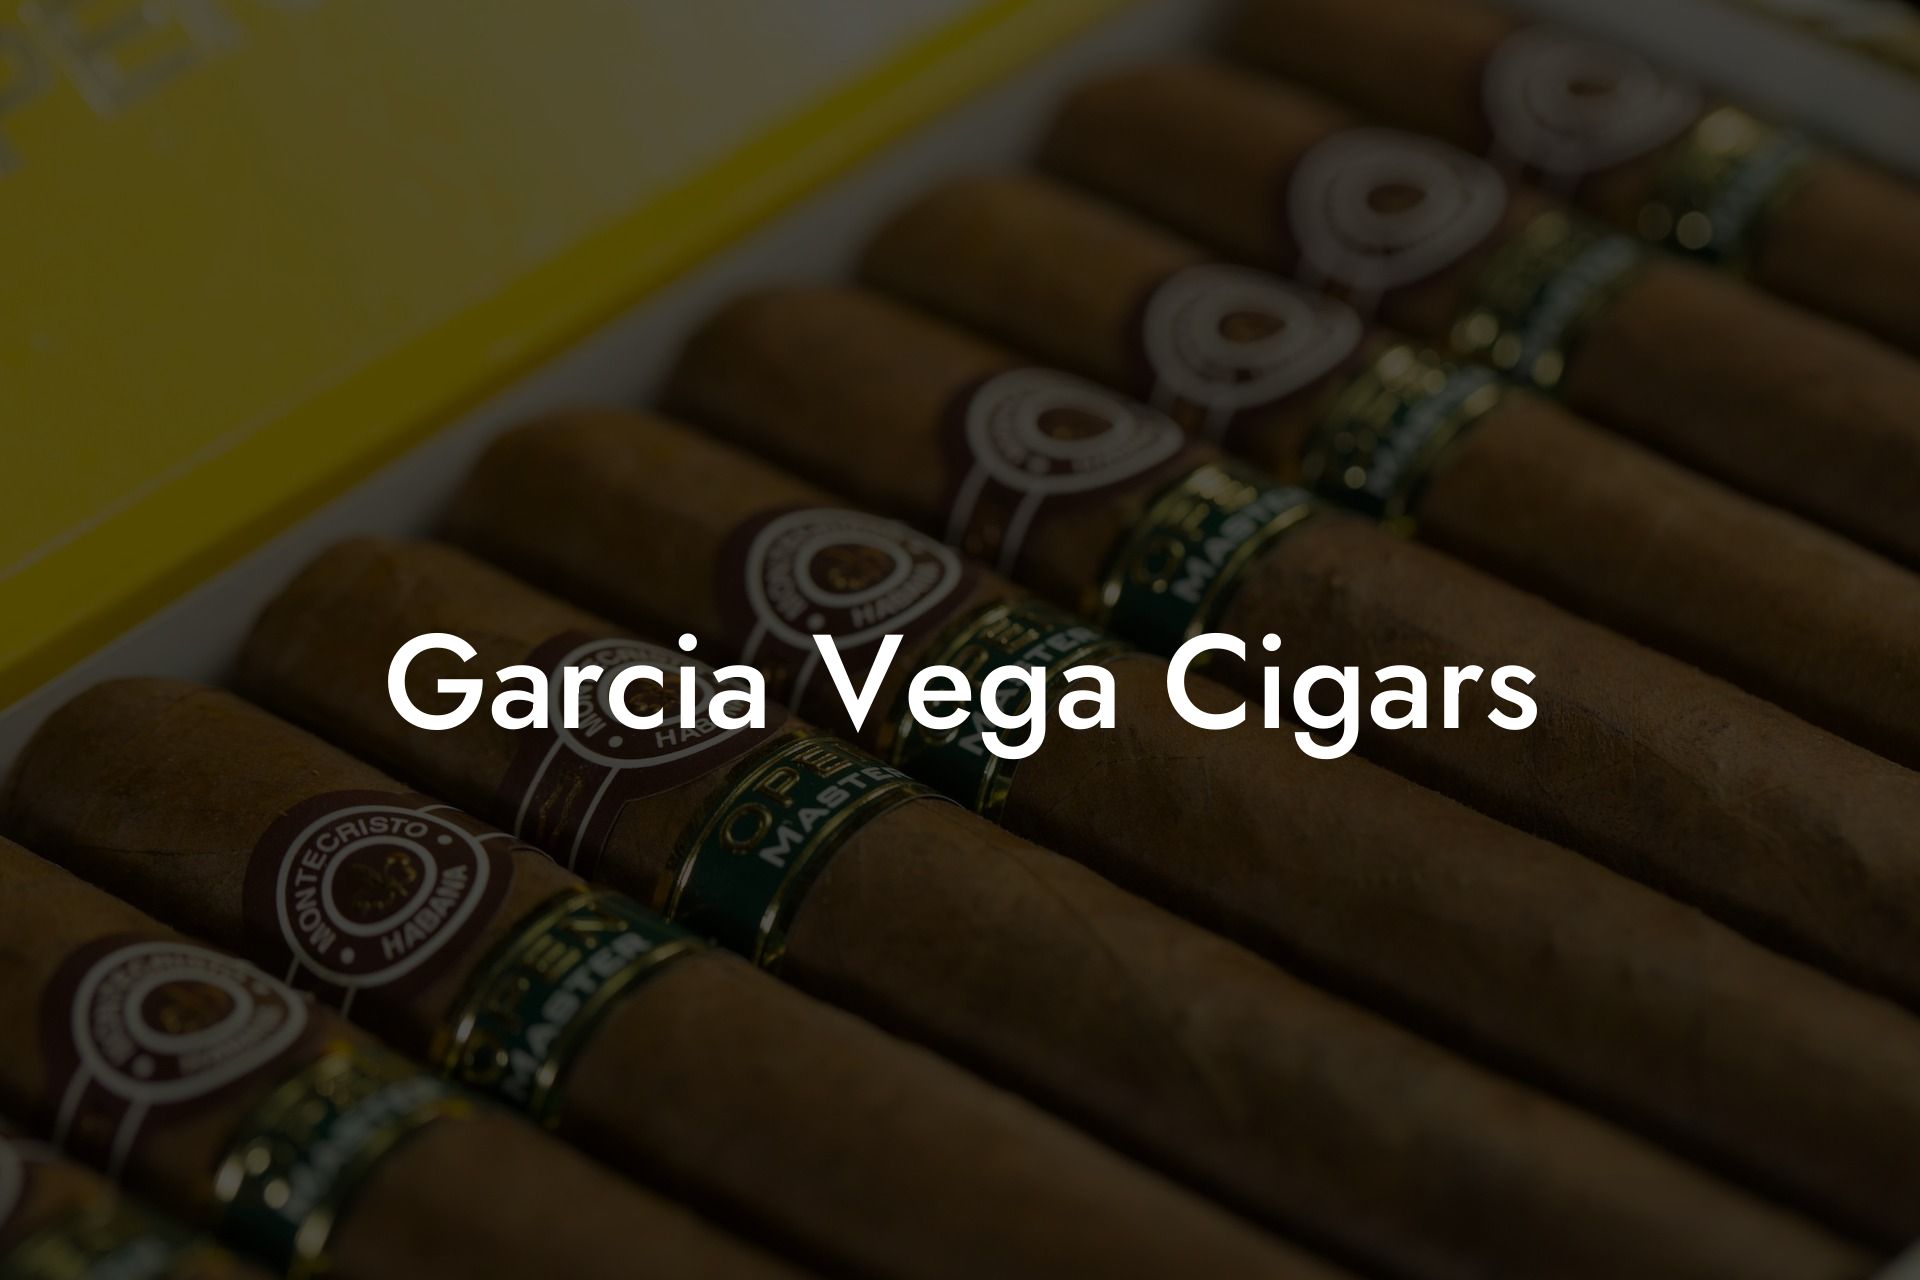 Garcia Vega Cigars